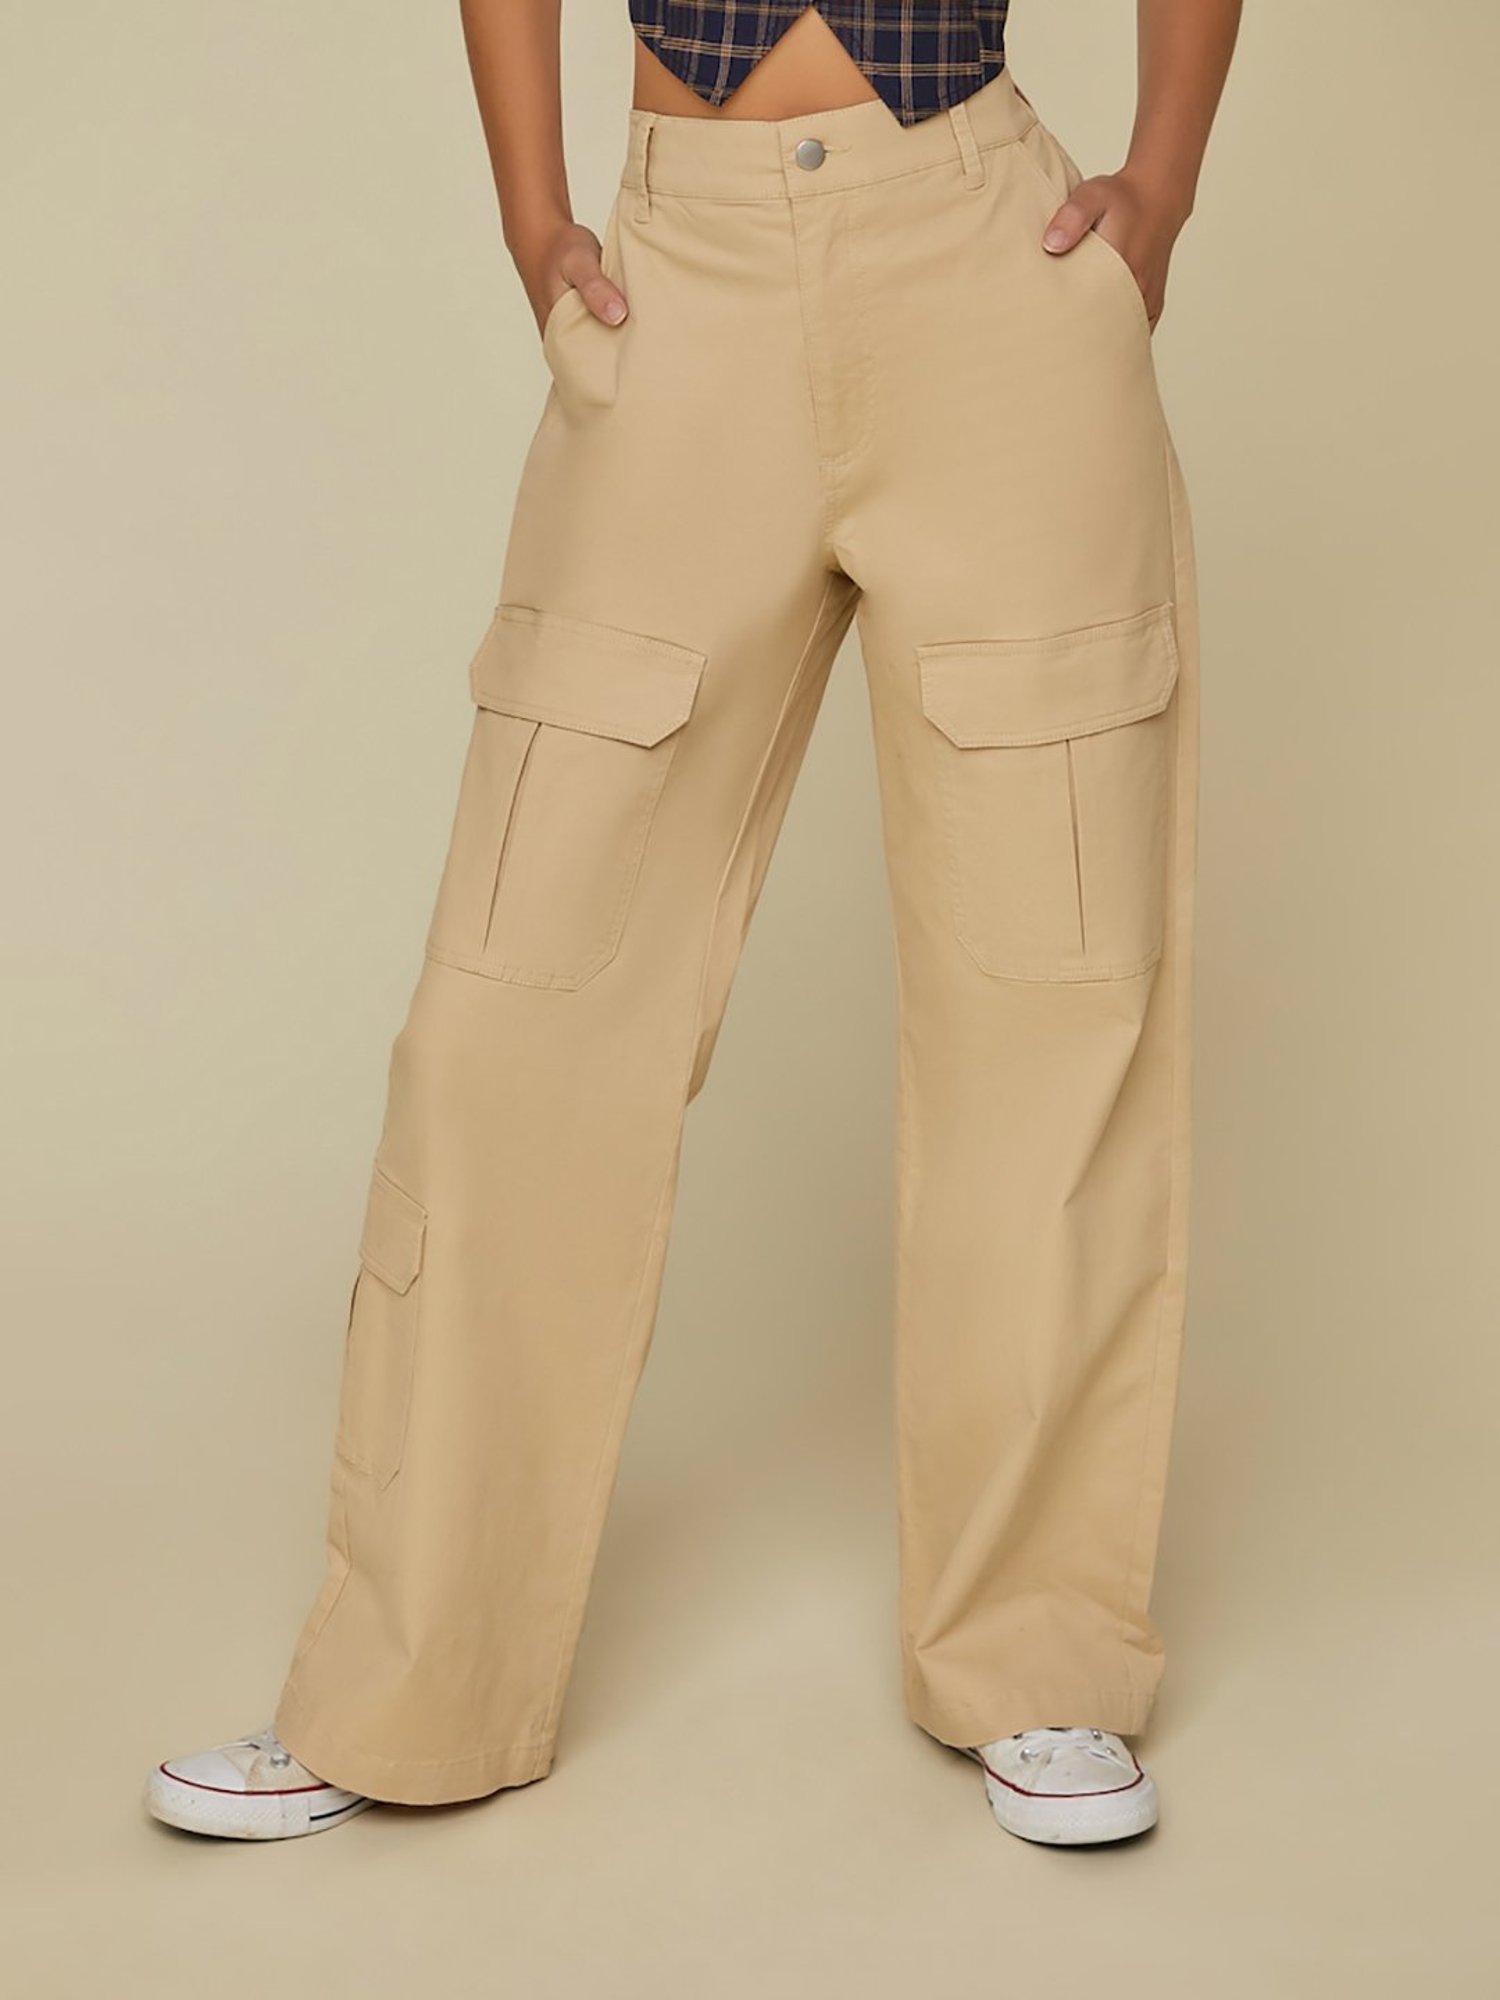 Buy Women Beige Slim Fit Solid Casual Trousers Online  274594  Allen Solly